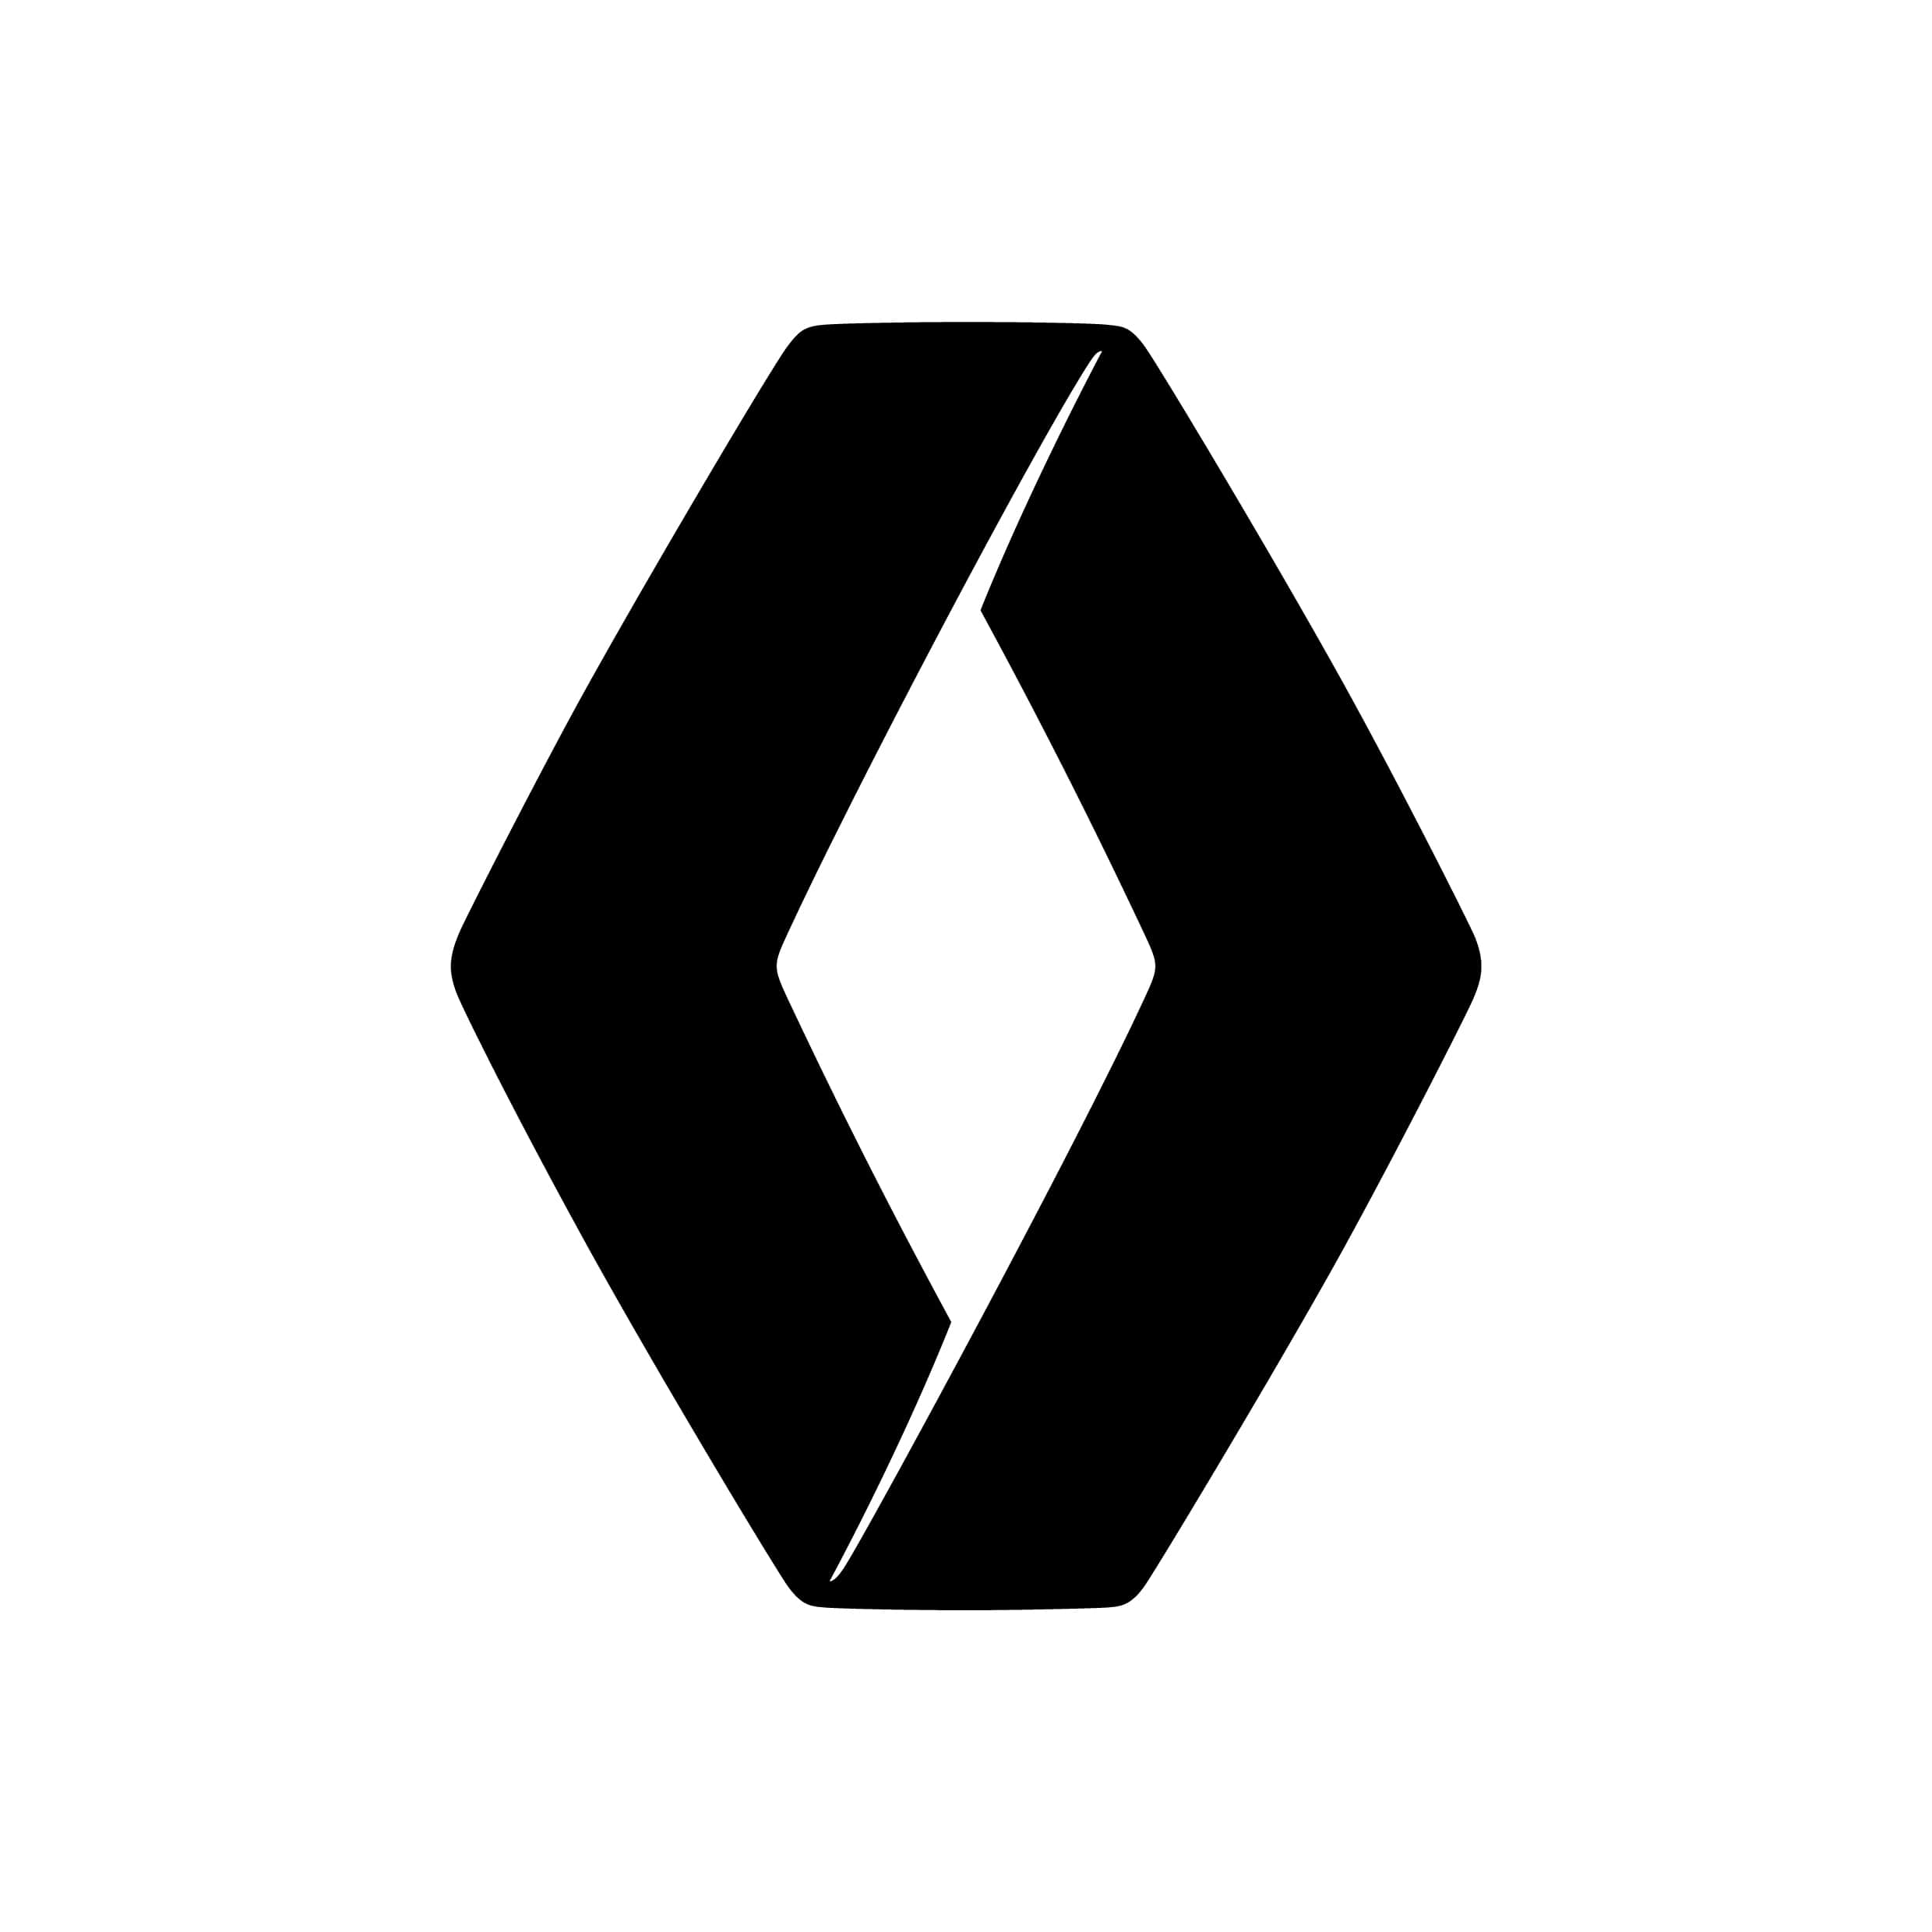 Stickers Renault Logo 2 Simple - Autocollant voiture